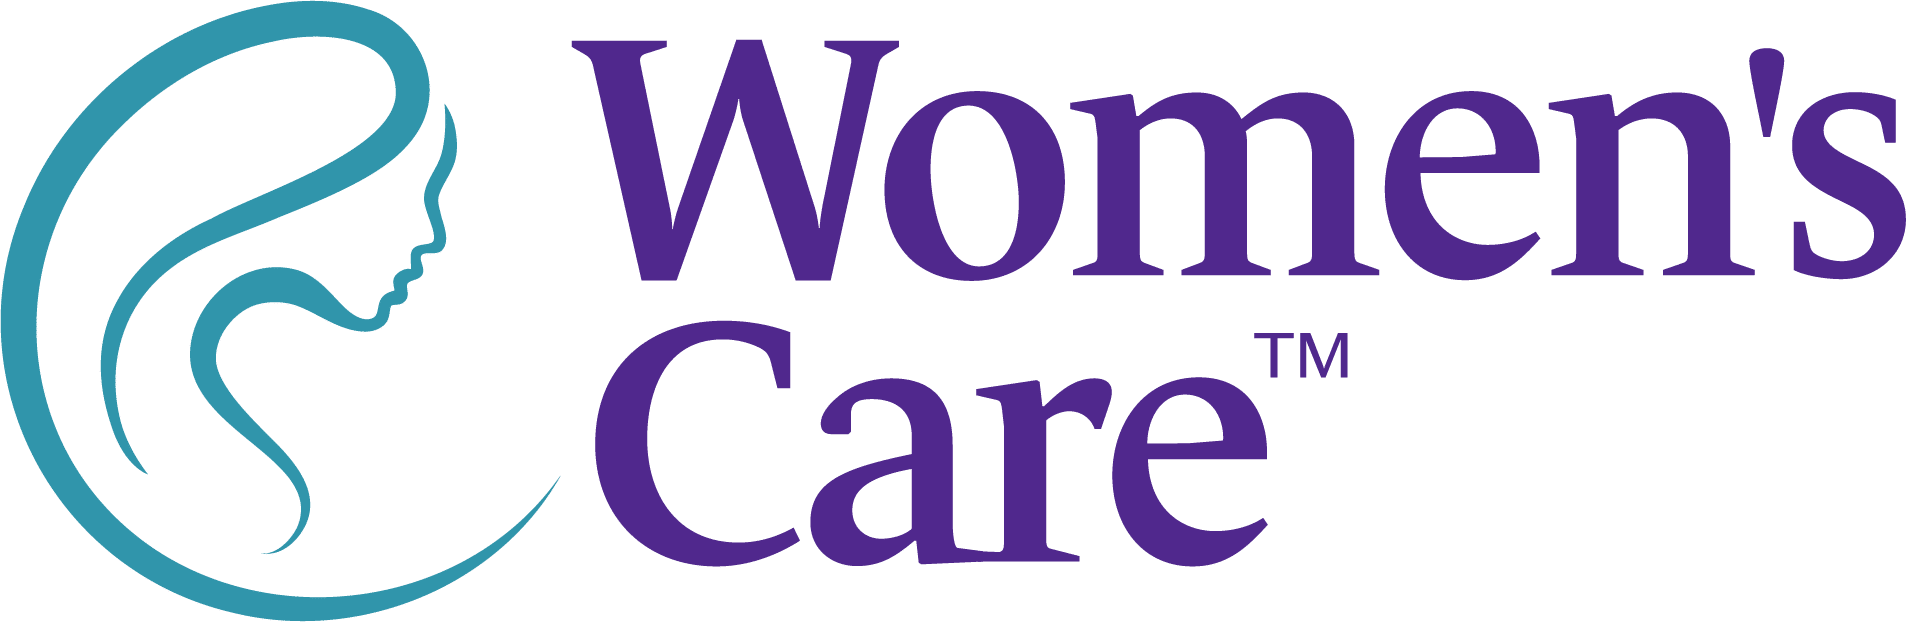 Women's Care